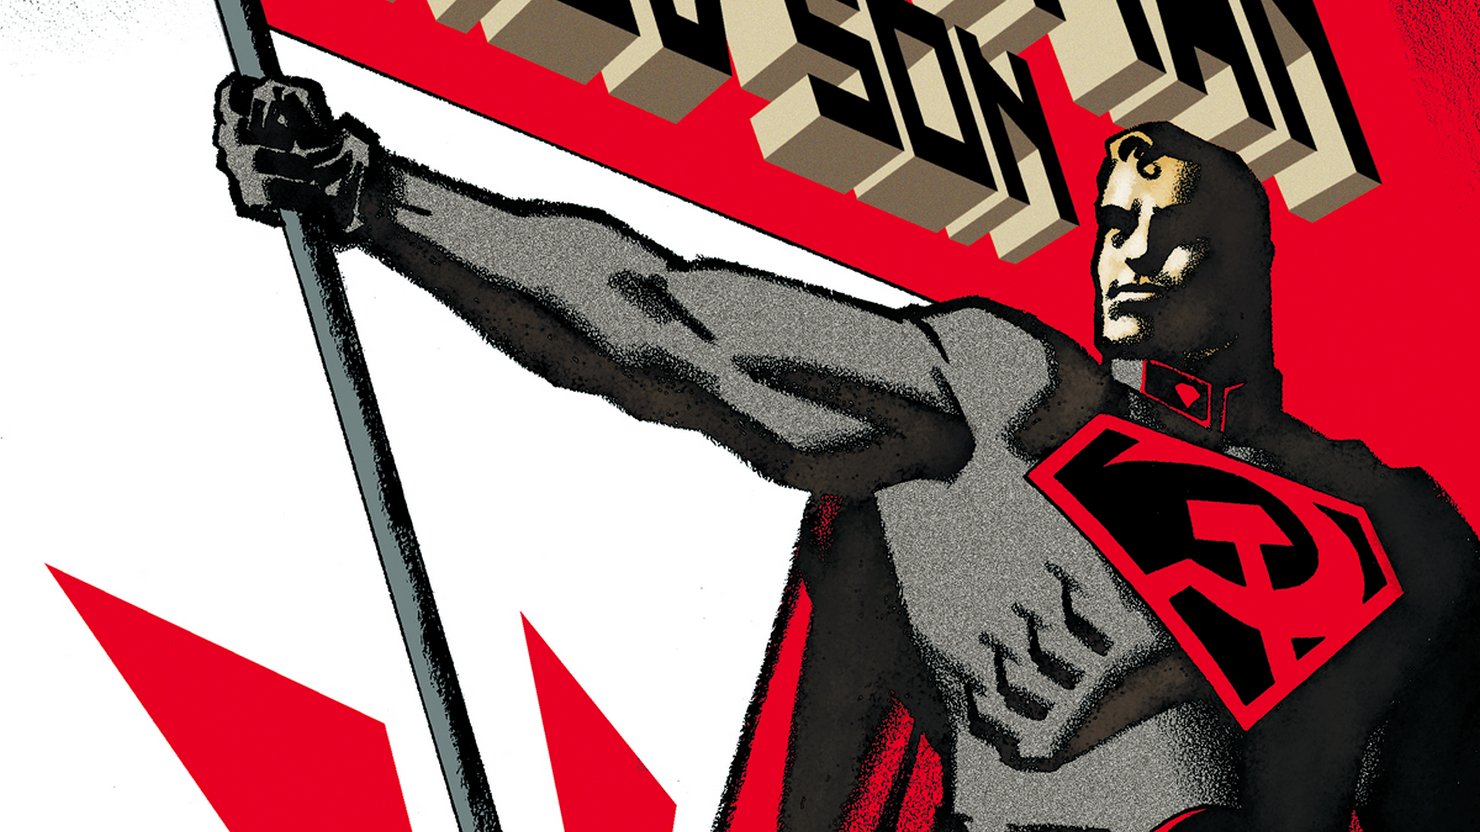 Красные сынки. Супермен: красный сын / Superman: Red son. Супермен красный сын 2020. Красный сын Криптона. Советский Супермен красный сын.